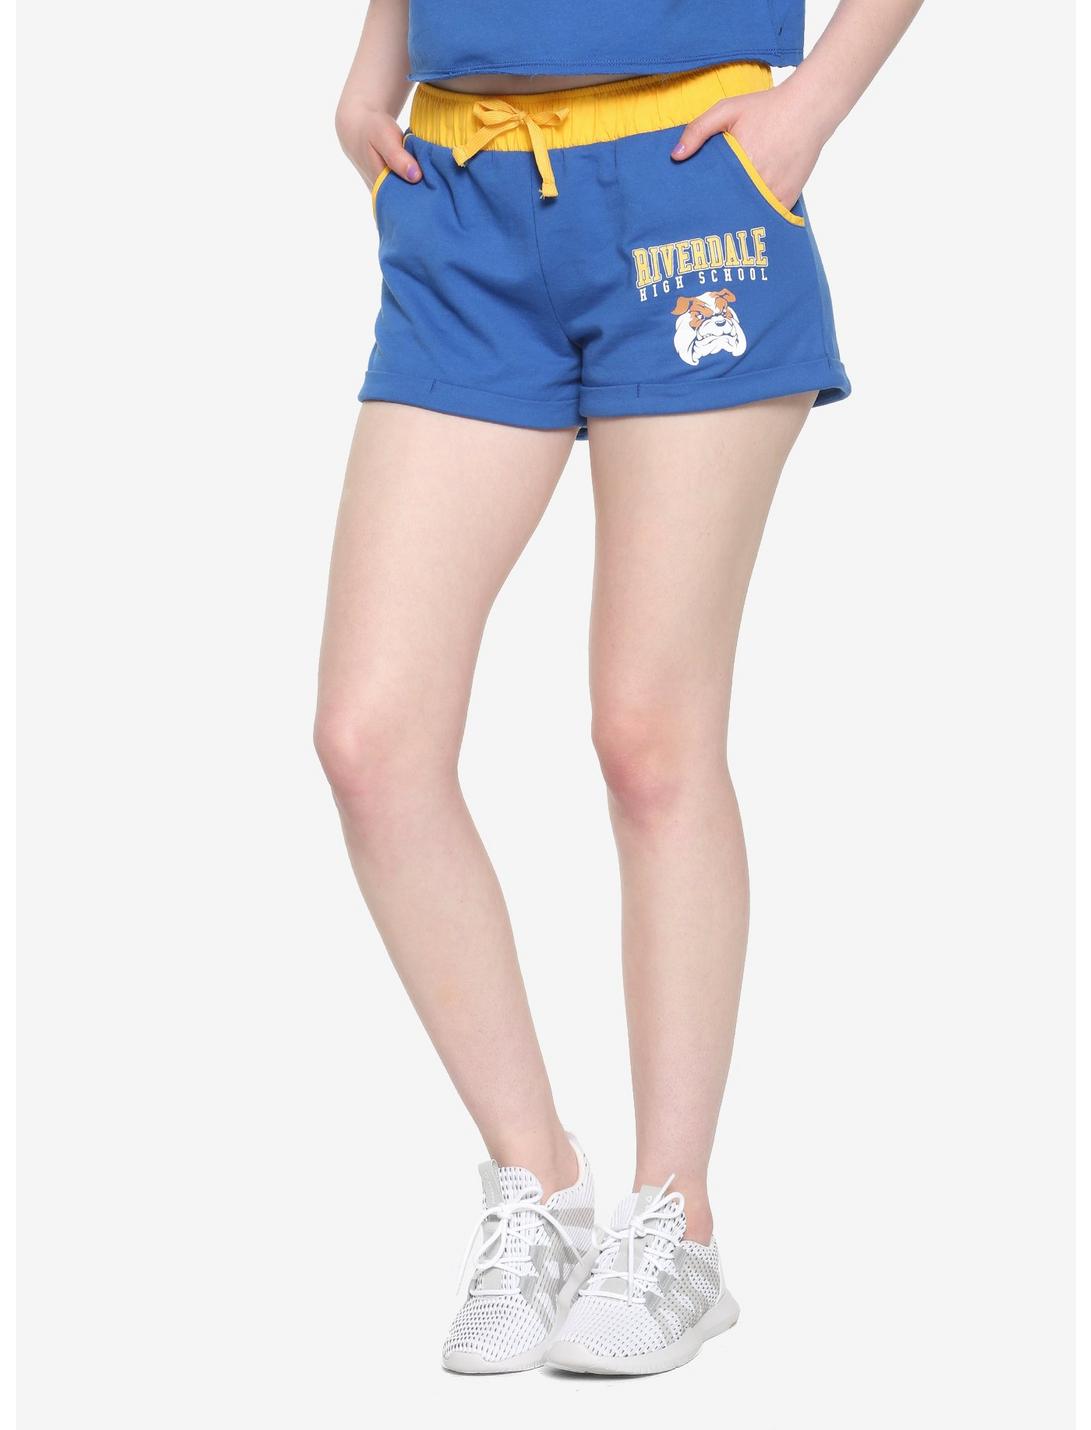 Riverdale Varsity Girls Soft Shorts Hot Topic Exclusive, BLUE, hi-res